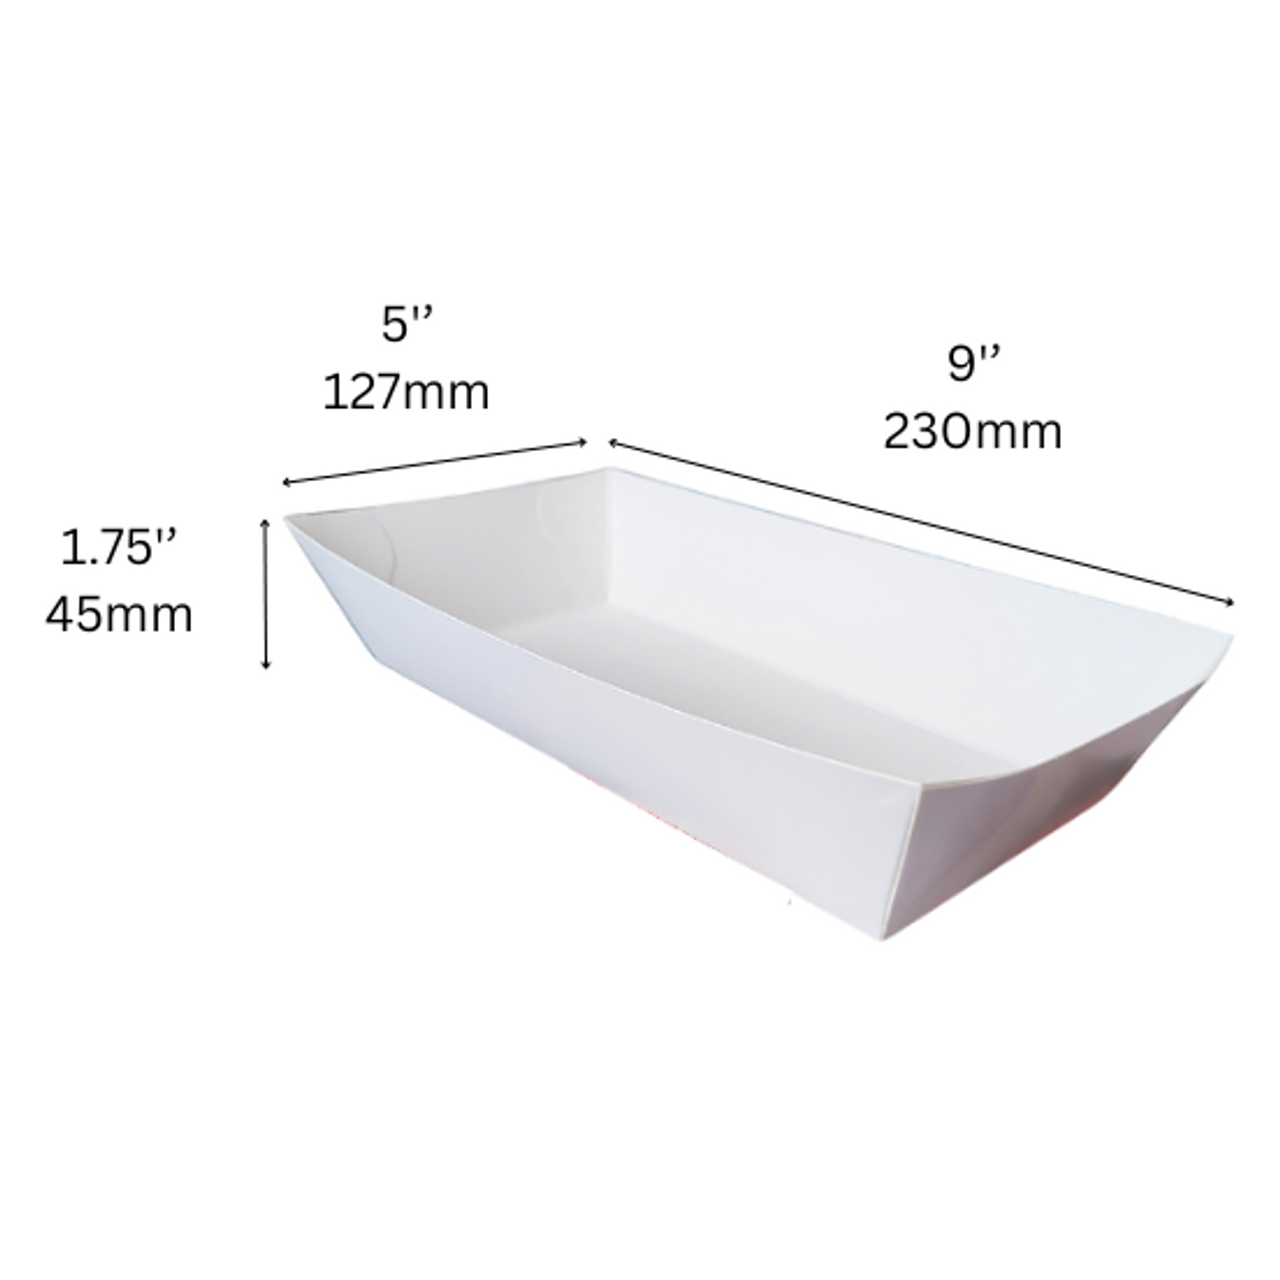 White cardboard wax lined food tray 9 x 5 inch (230 x 127 x 45mm) Case x 250